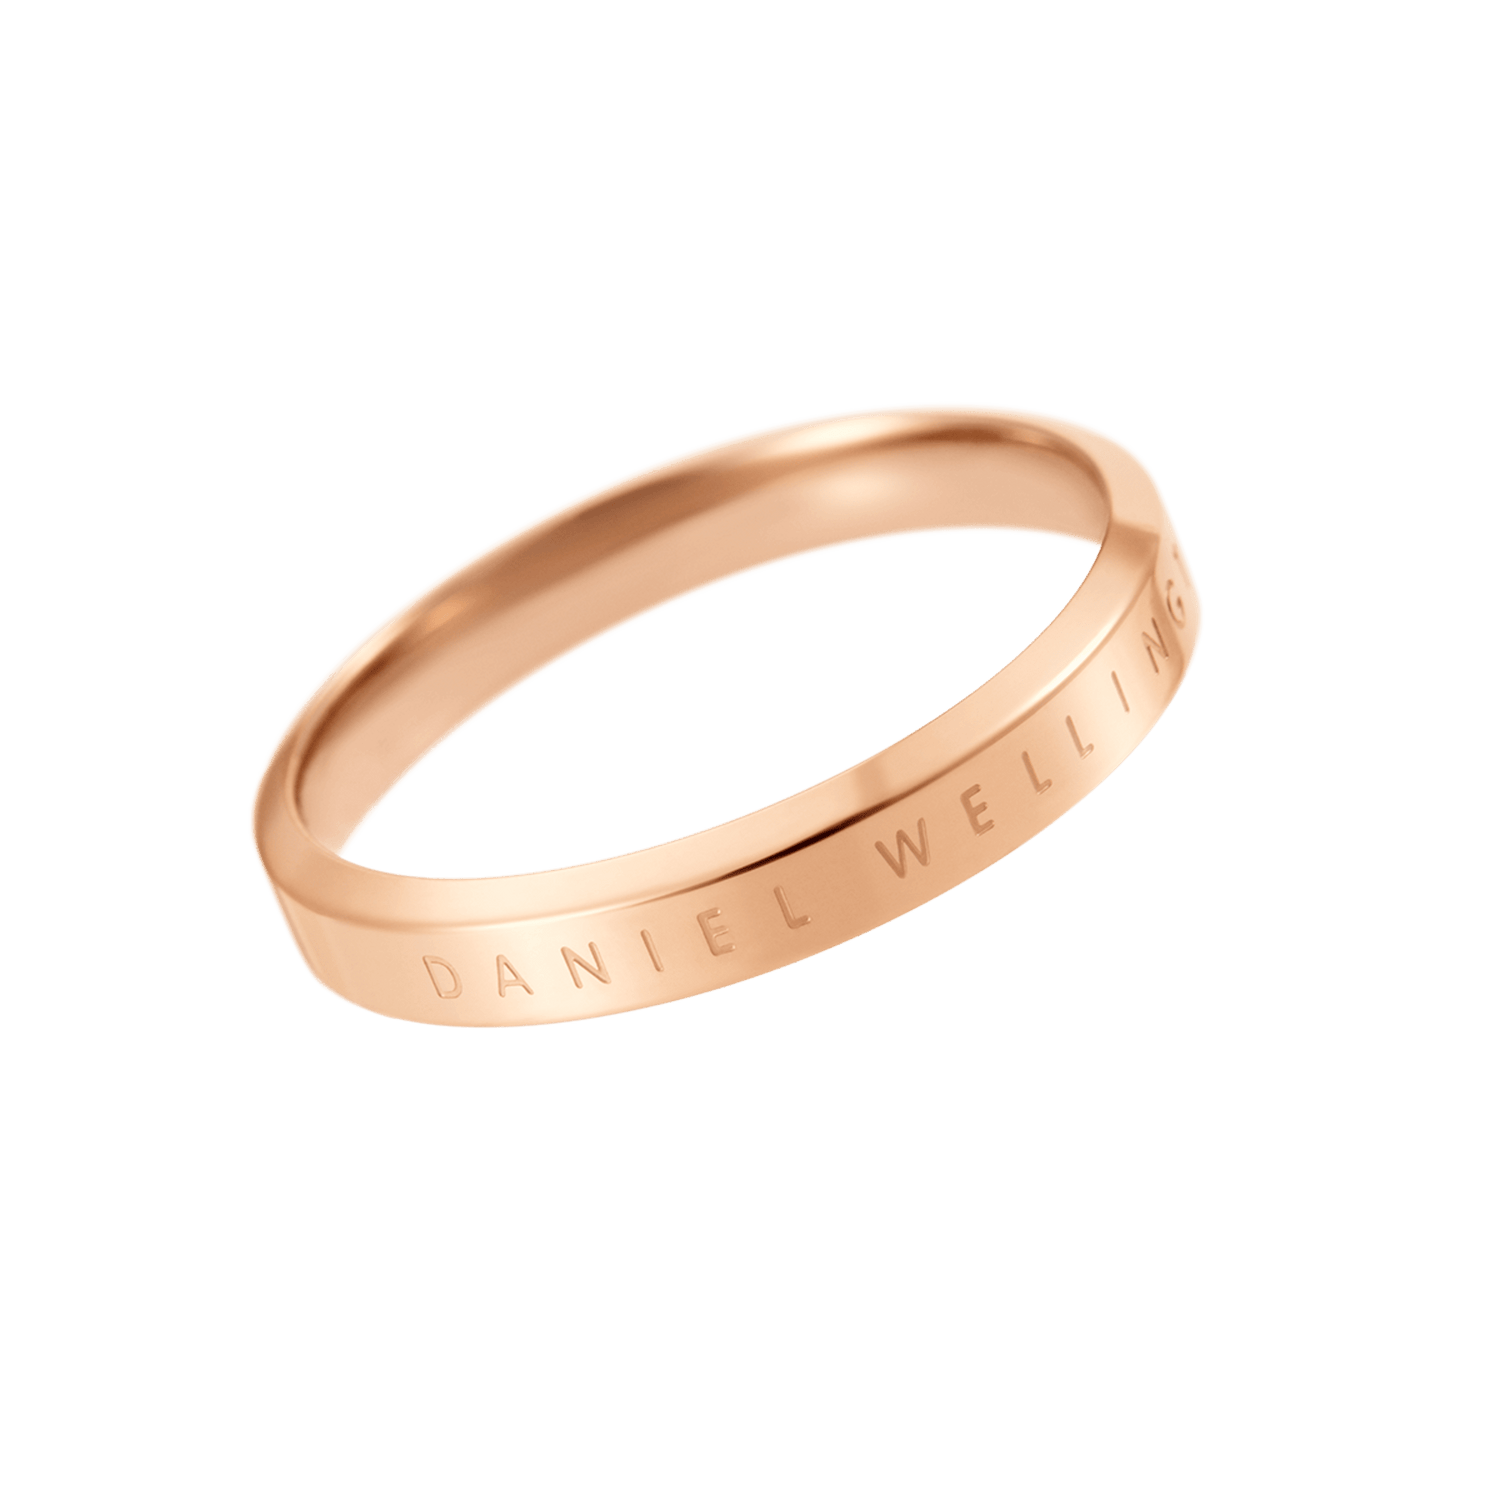 Classic Ring in rose gold - Size 48 | Daniel Wellington Japan